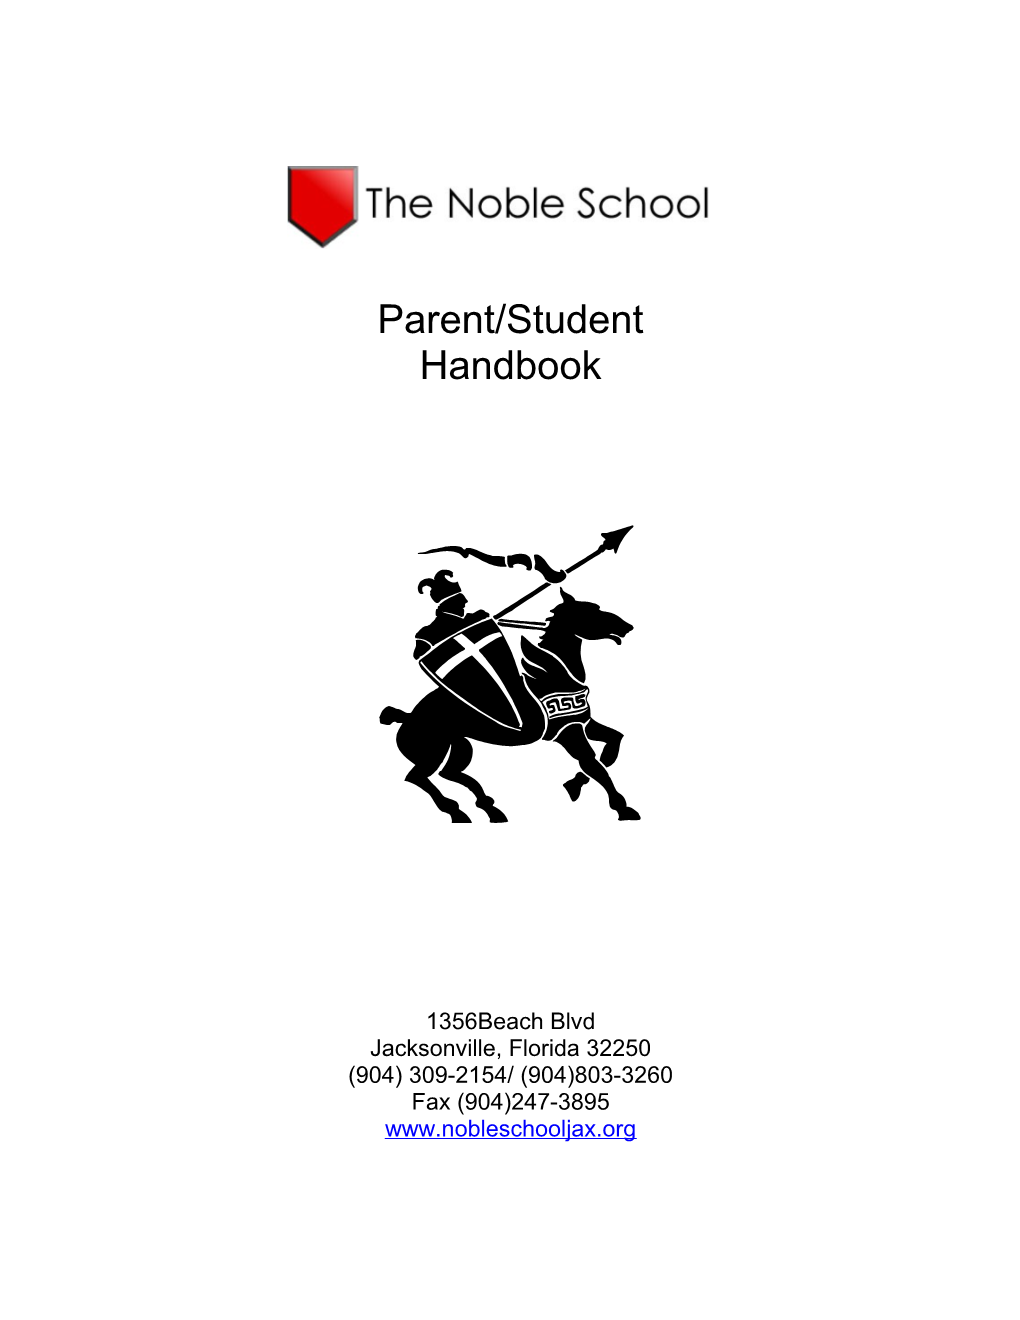 The Noble Street School